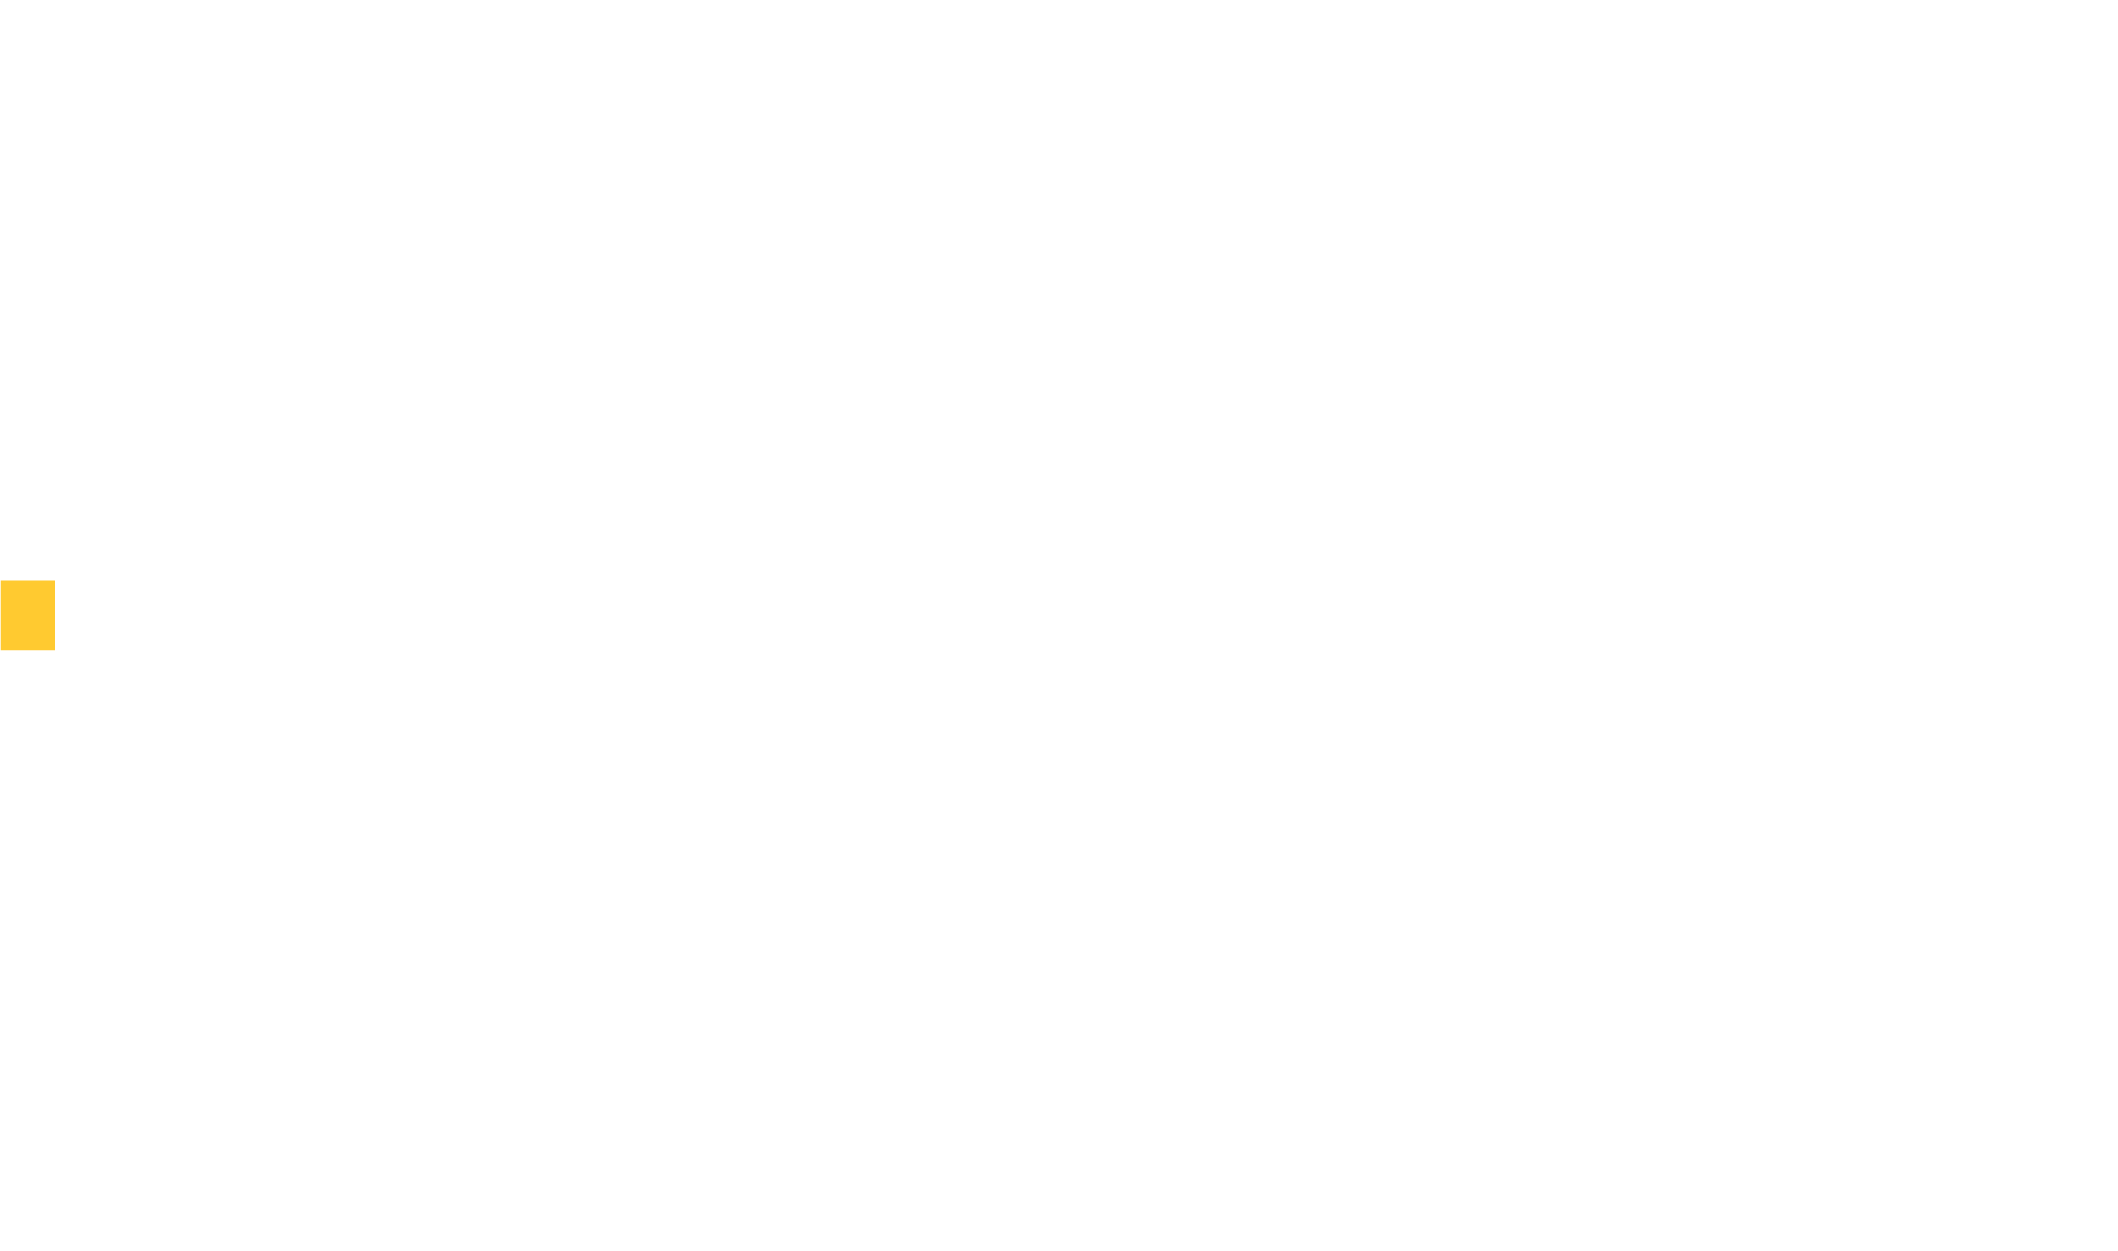 Maverick Media